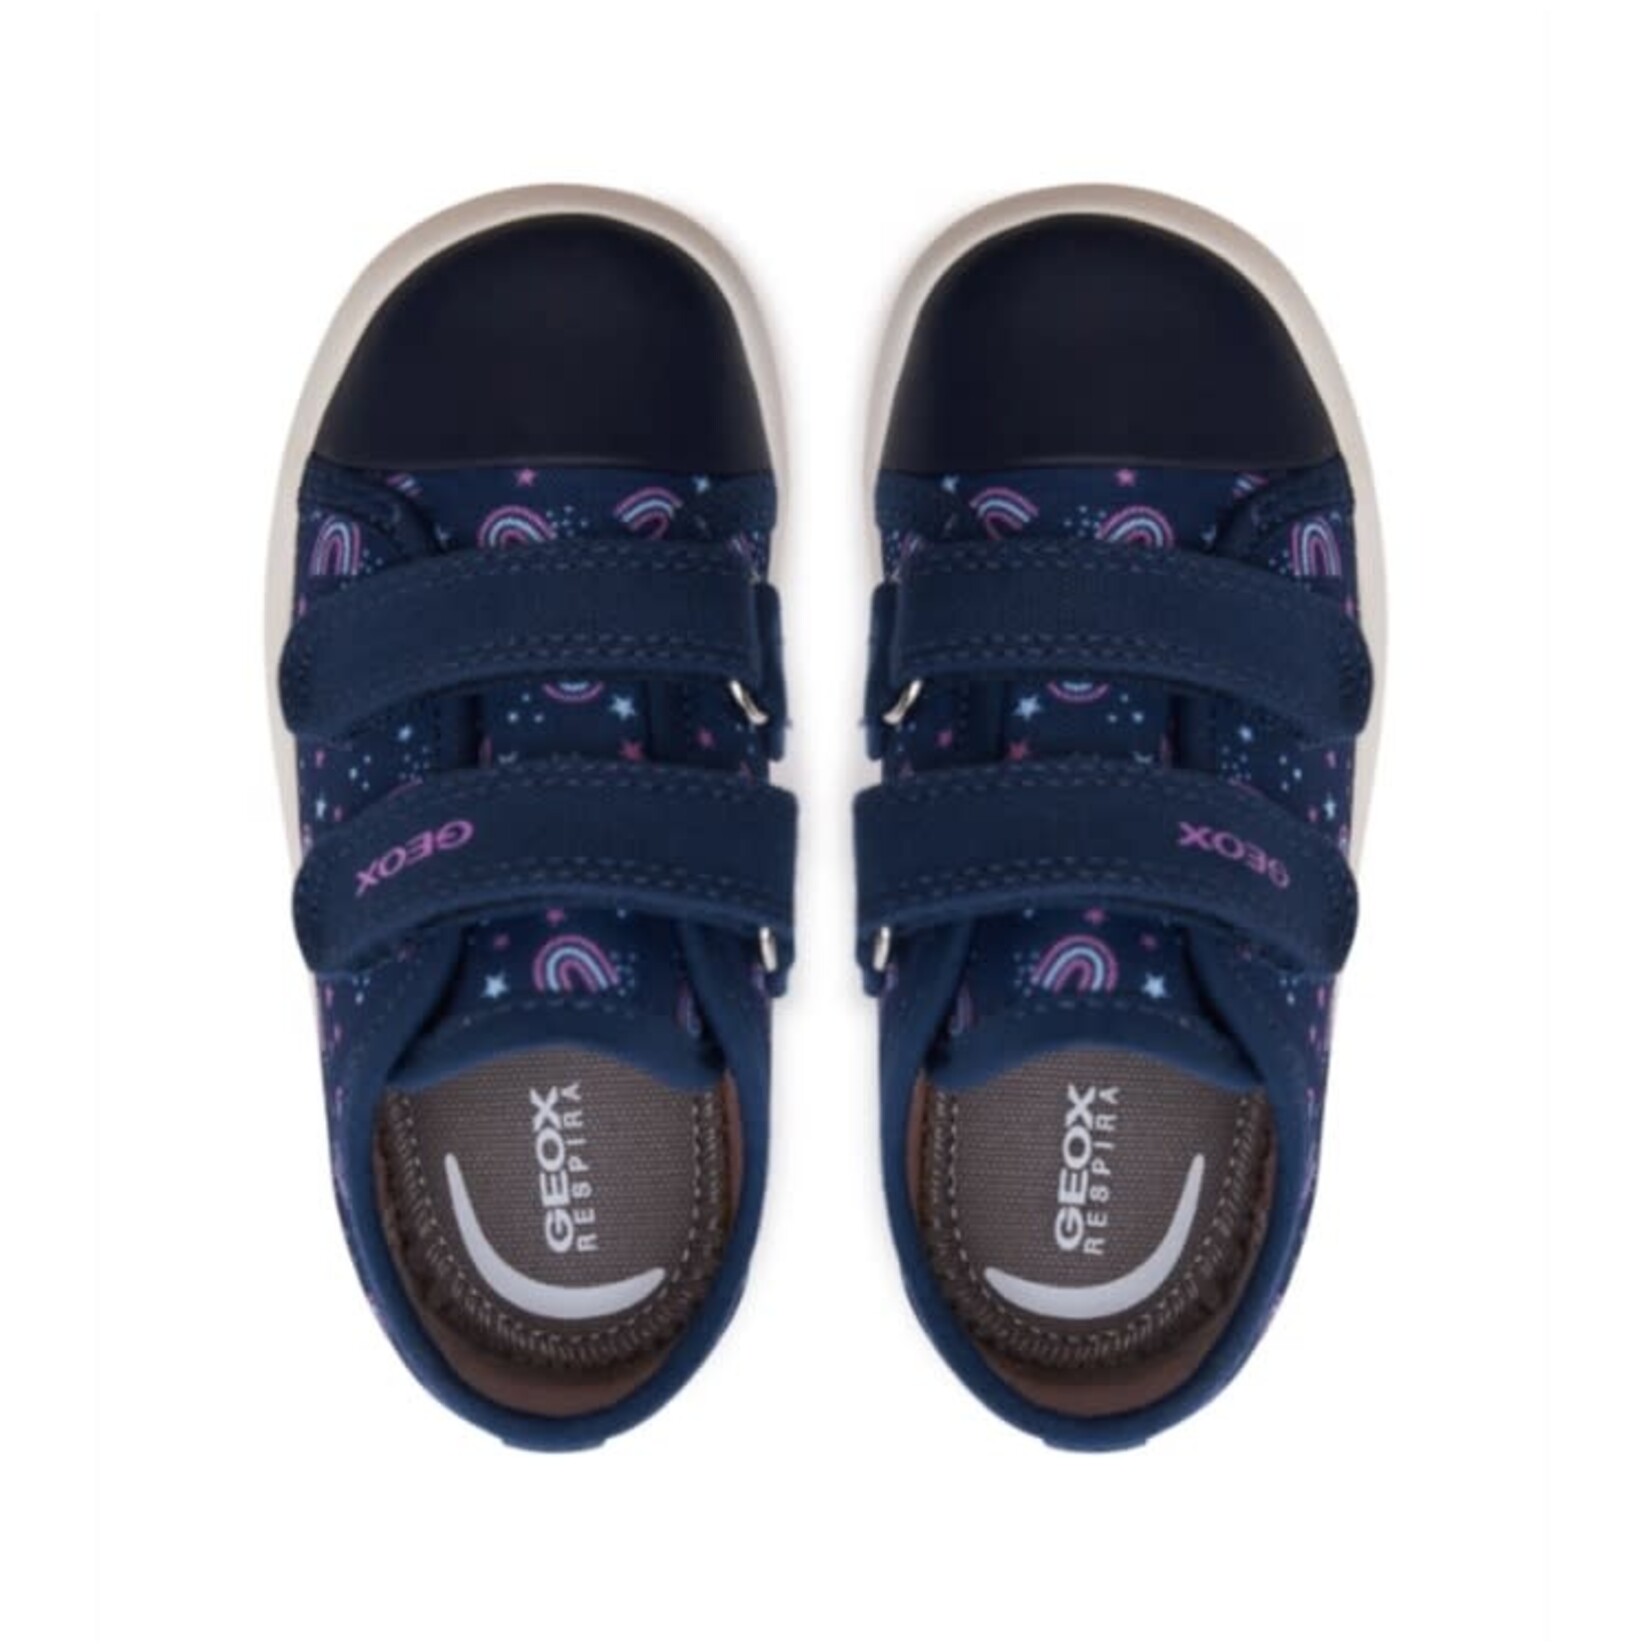 Geox GEOX - Chaussures de toile marine avec motif d'arcs-en-ciel 'Gisli - Bleu aviateur/Rose'